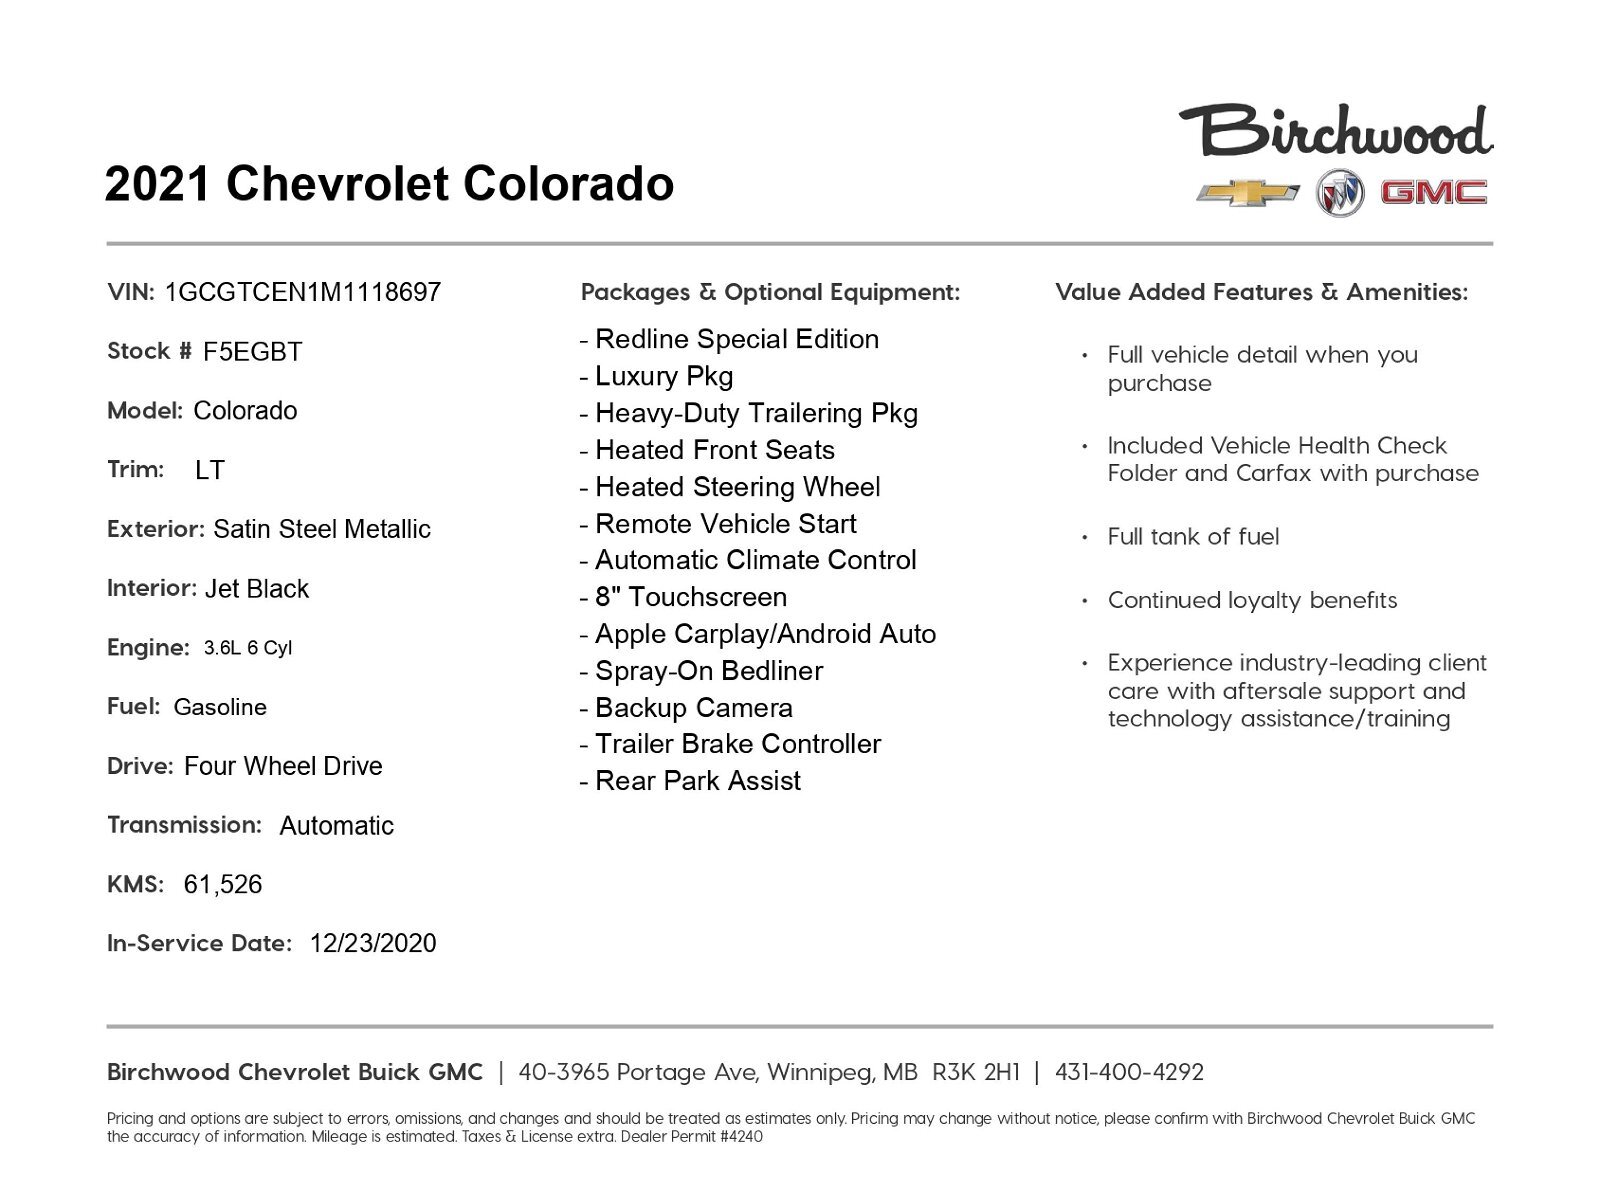 2021 Chevrolet Colorado 4WD LT 2-year Maintenance Free!